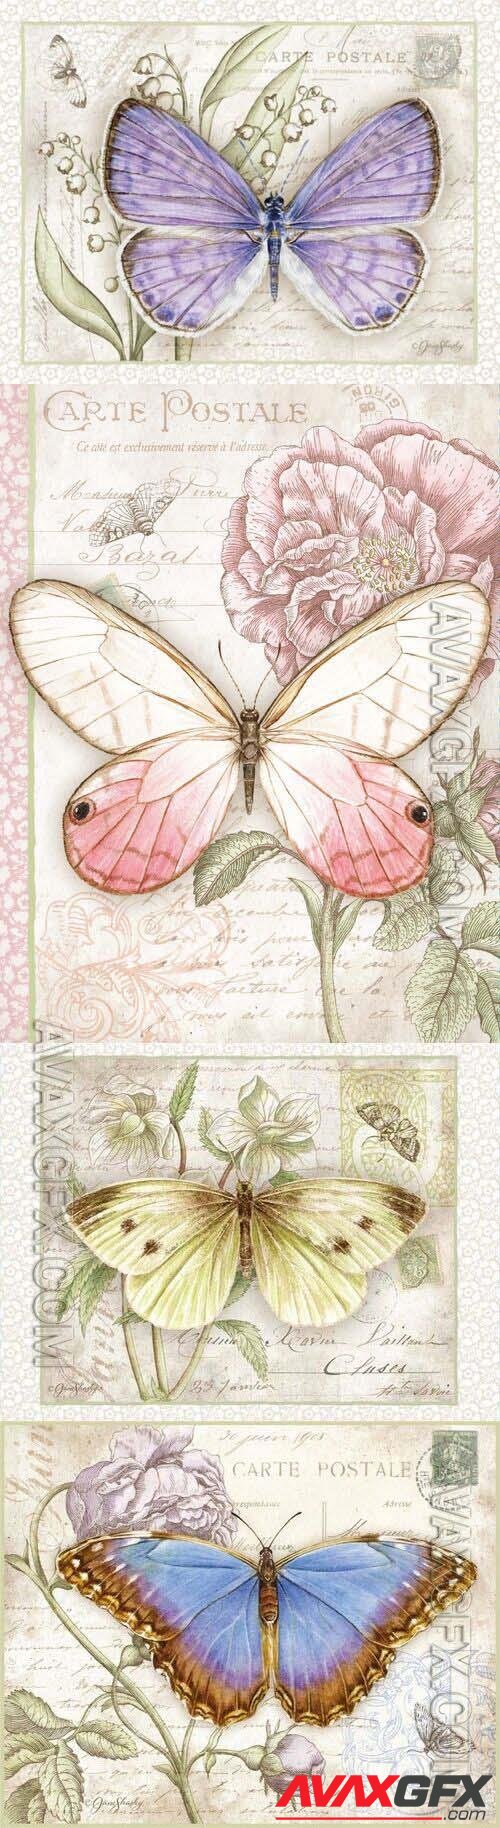 Beautiful butterflies on vintage backgrounds